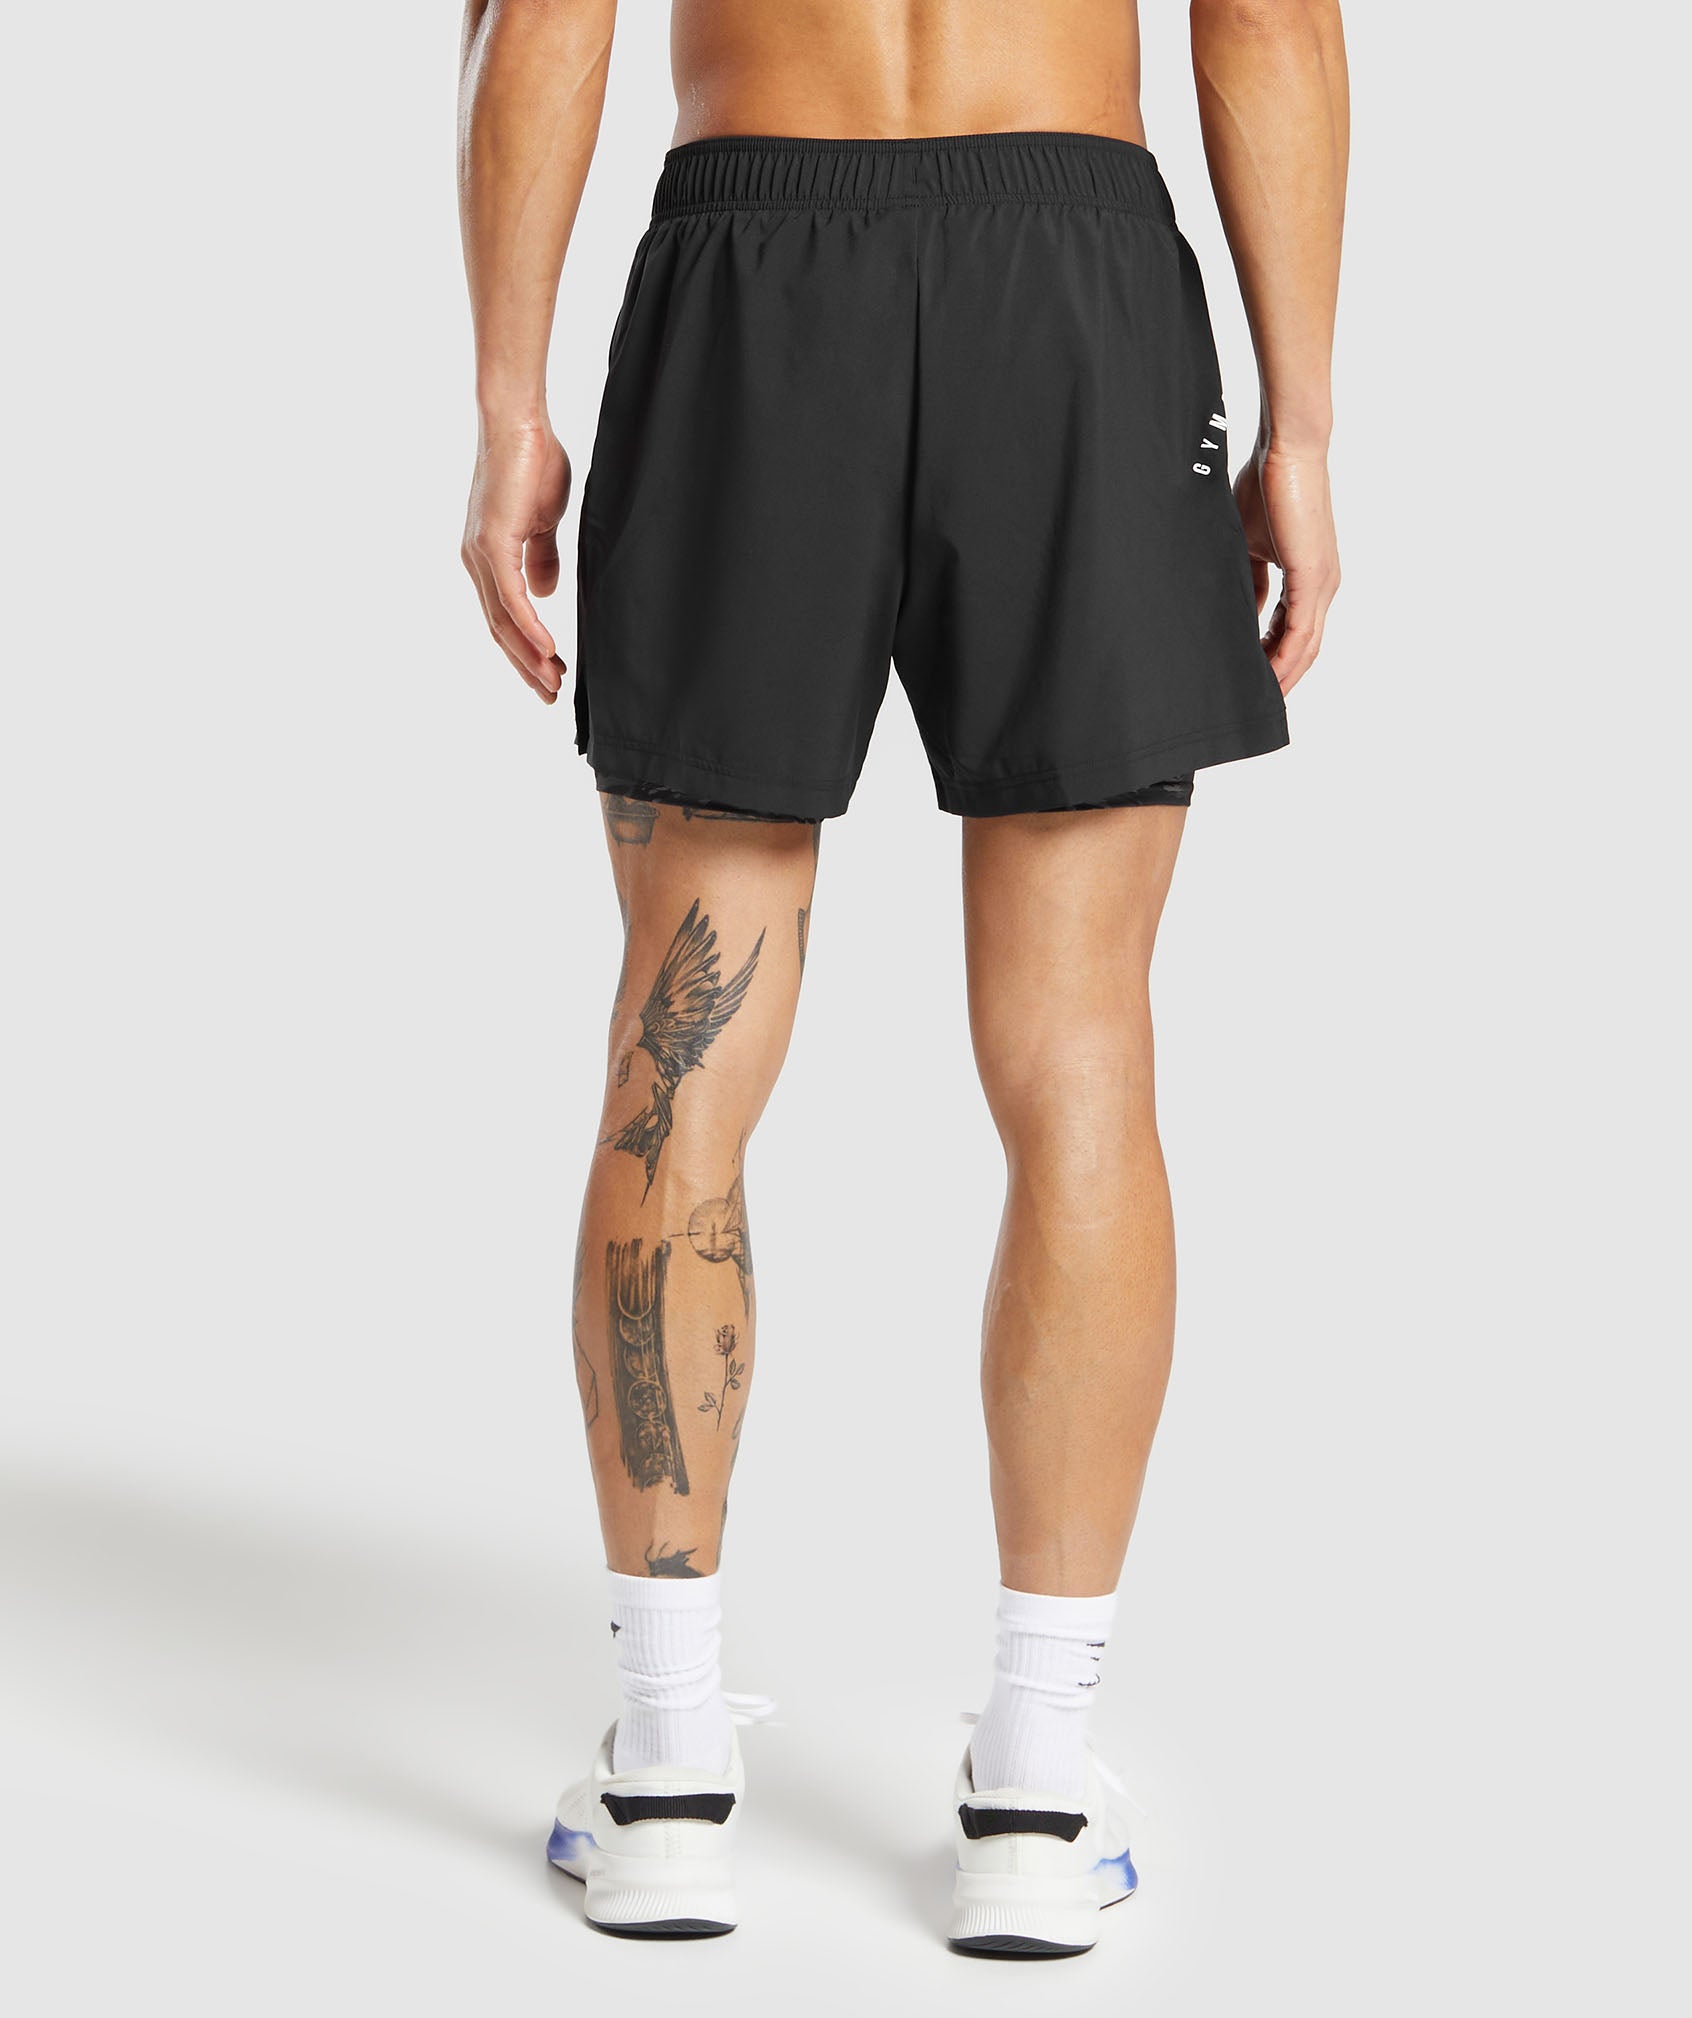 Sport  5" Shorts in Black/Asphalt Grey - view 2